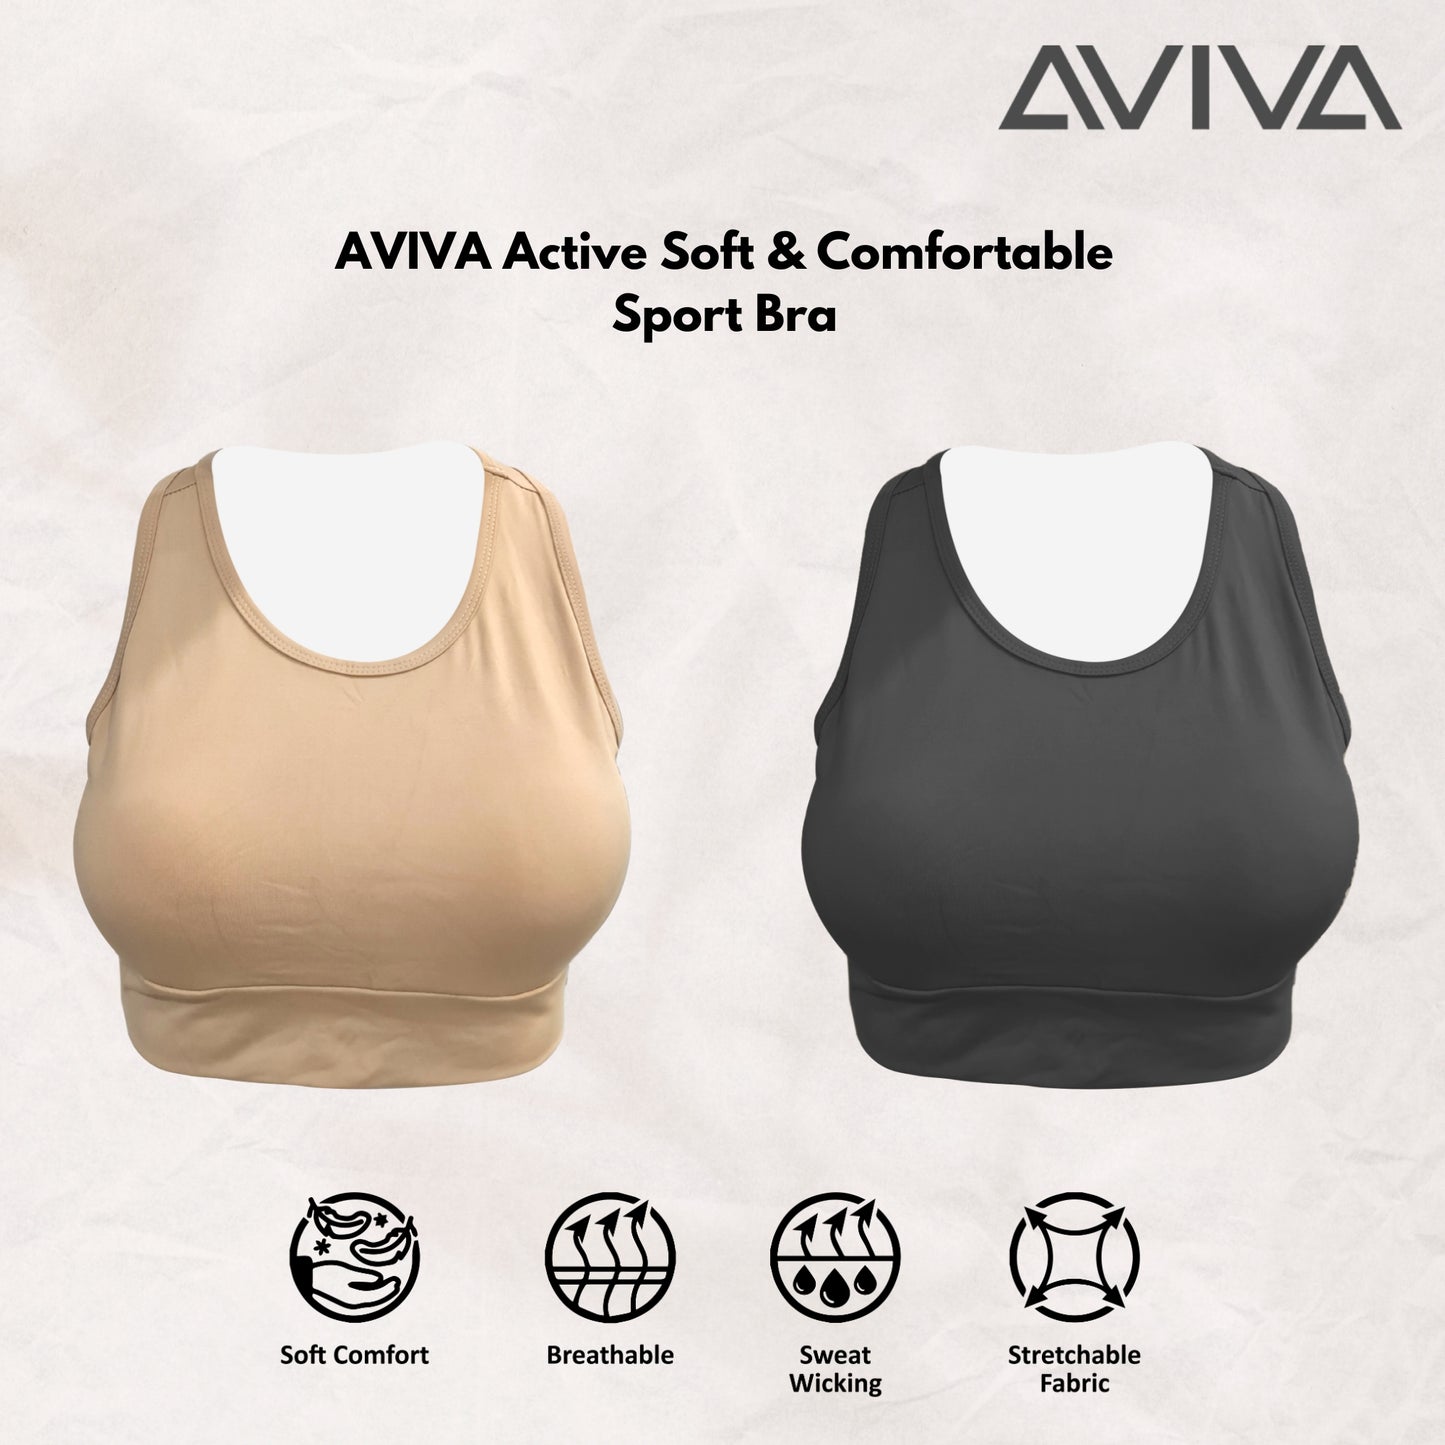 AVIVA Active Soft & Comfortable Sport Bra (80-6124)